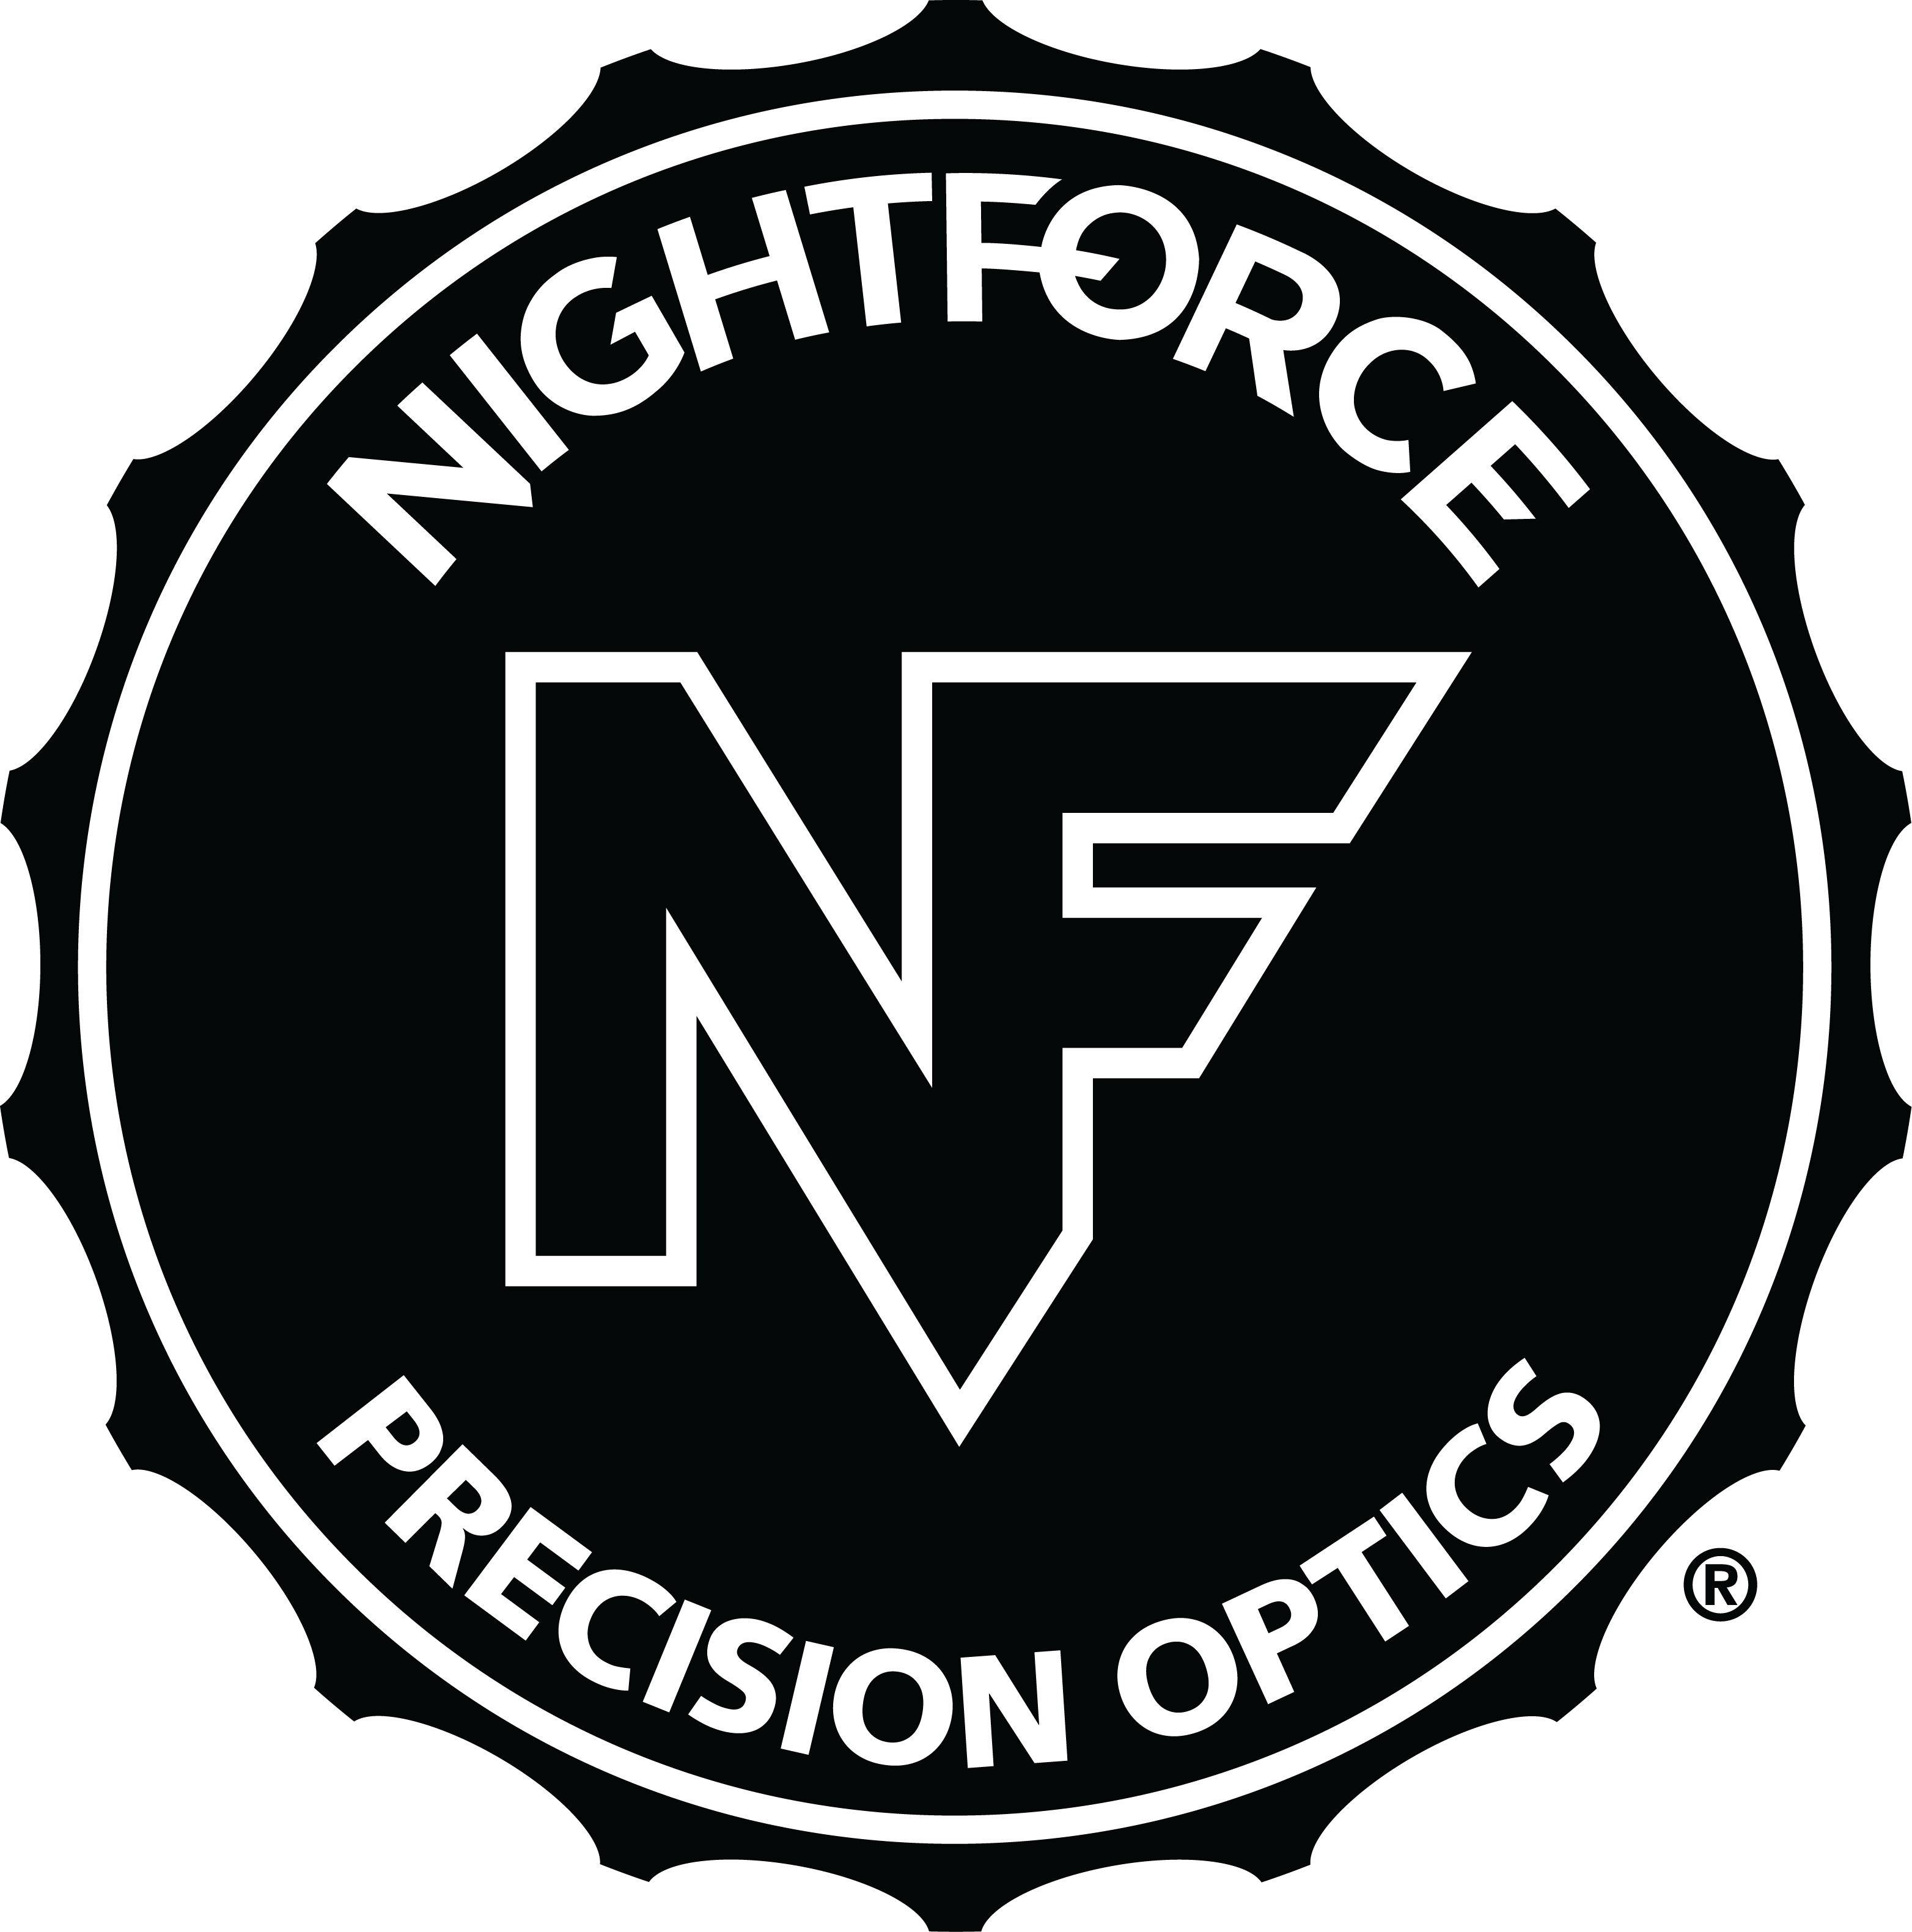 Nightforce Precision Optics